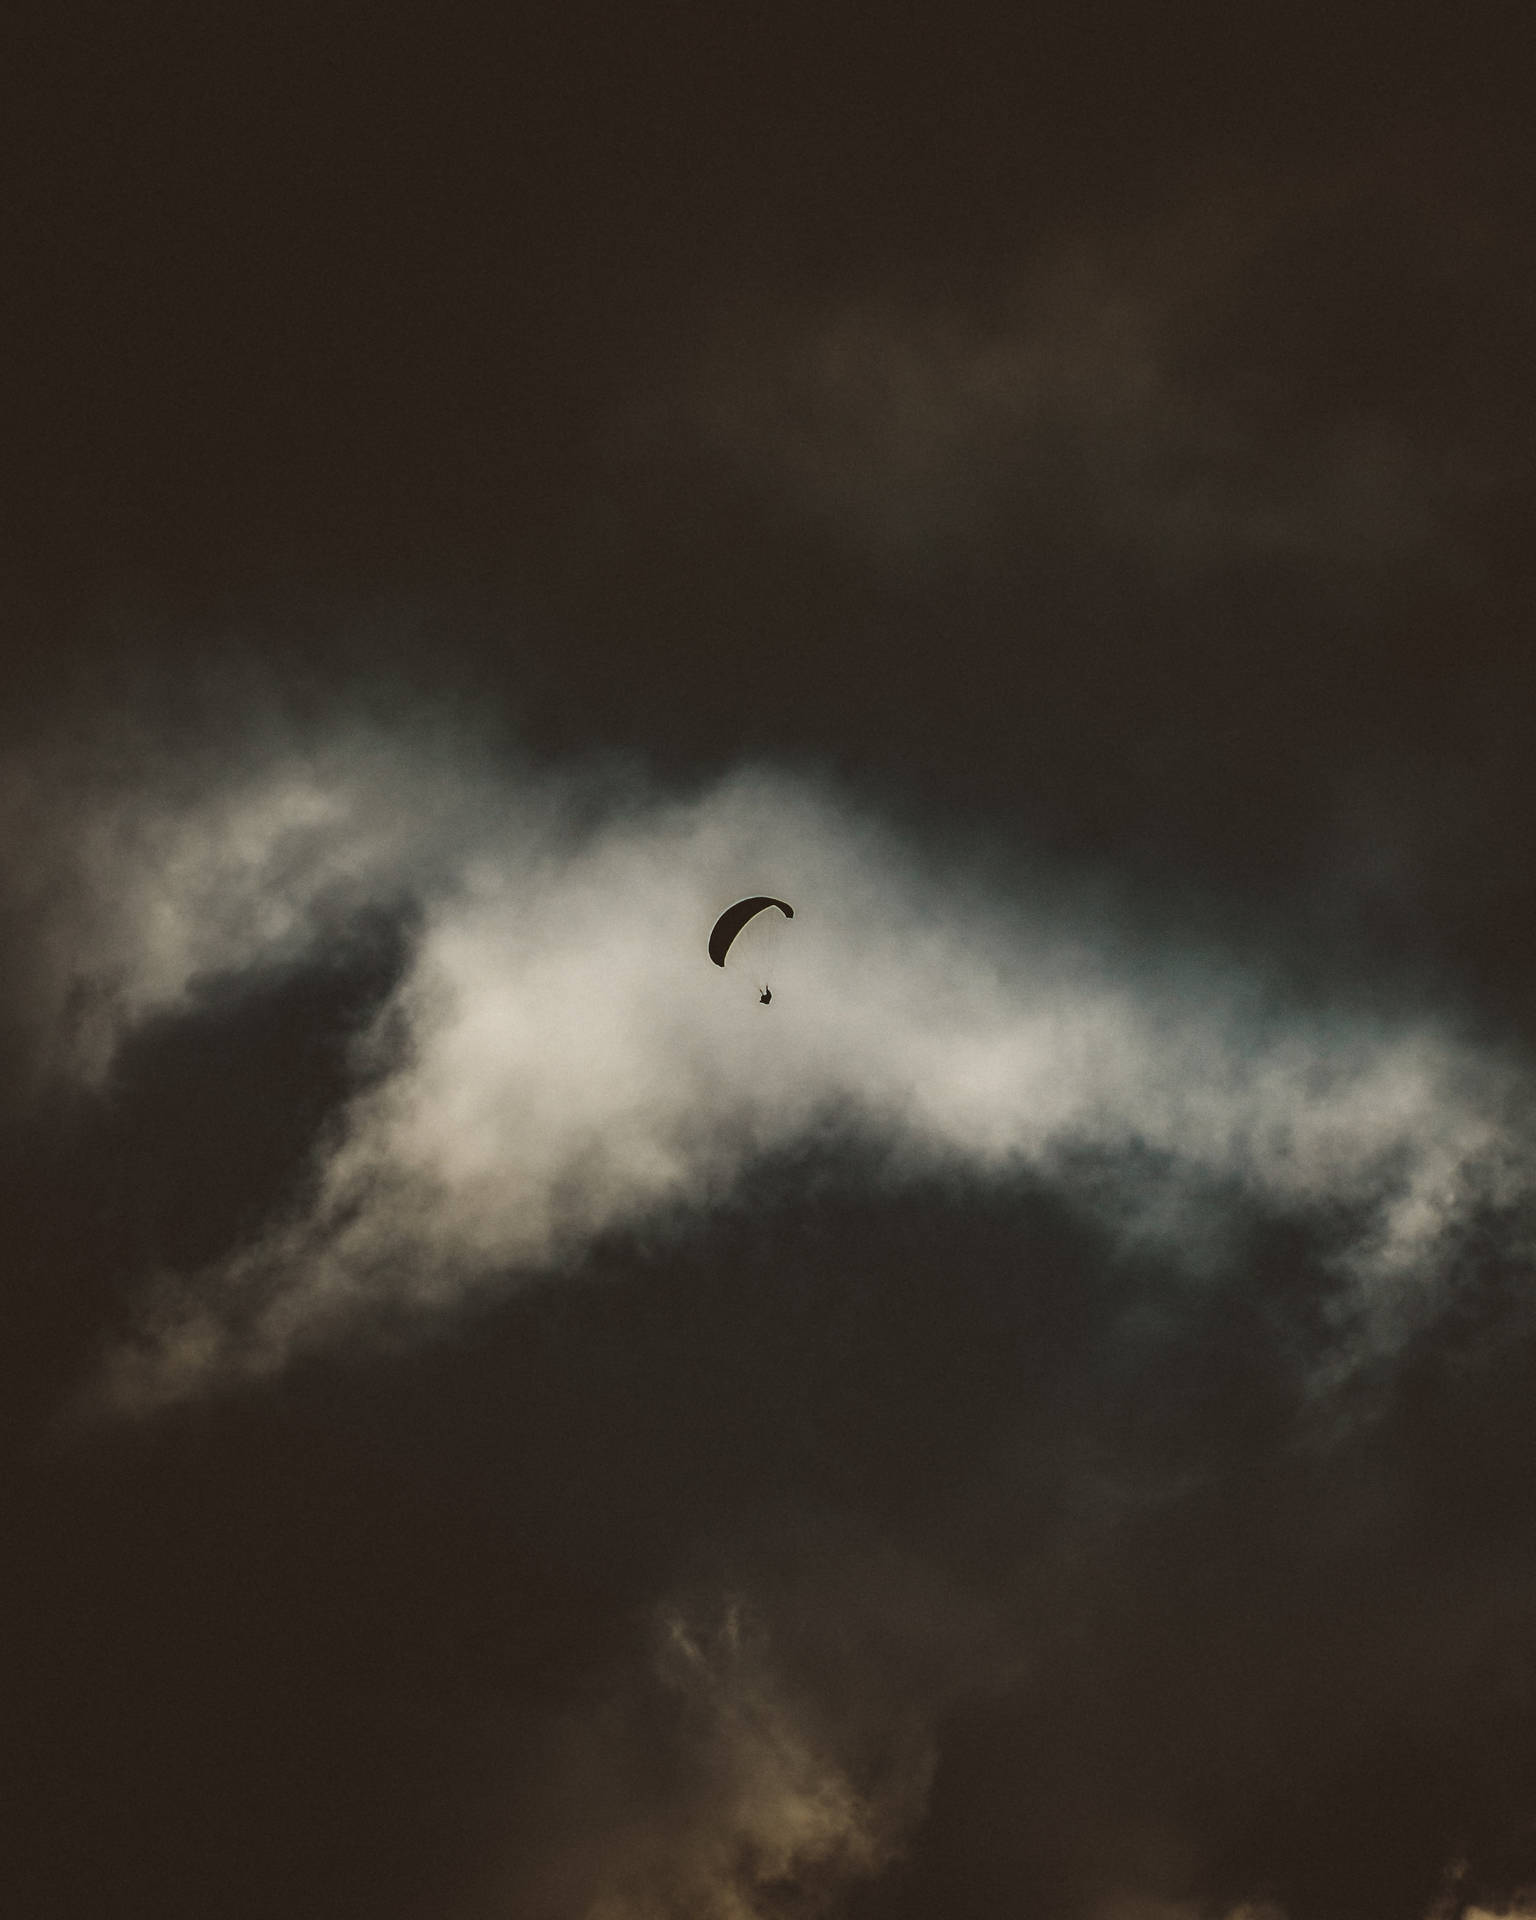 Paraglidinggegen Dunklen Himmel. Wallpaper